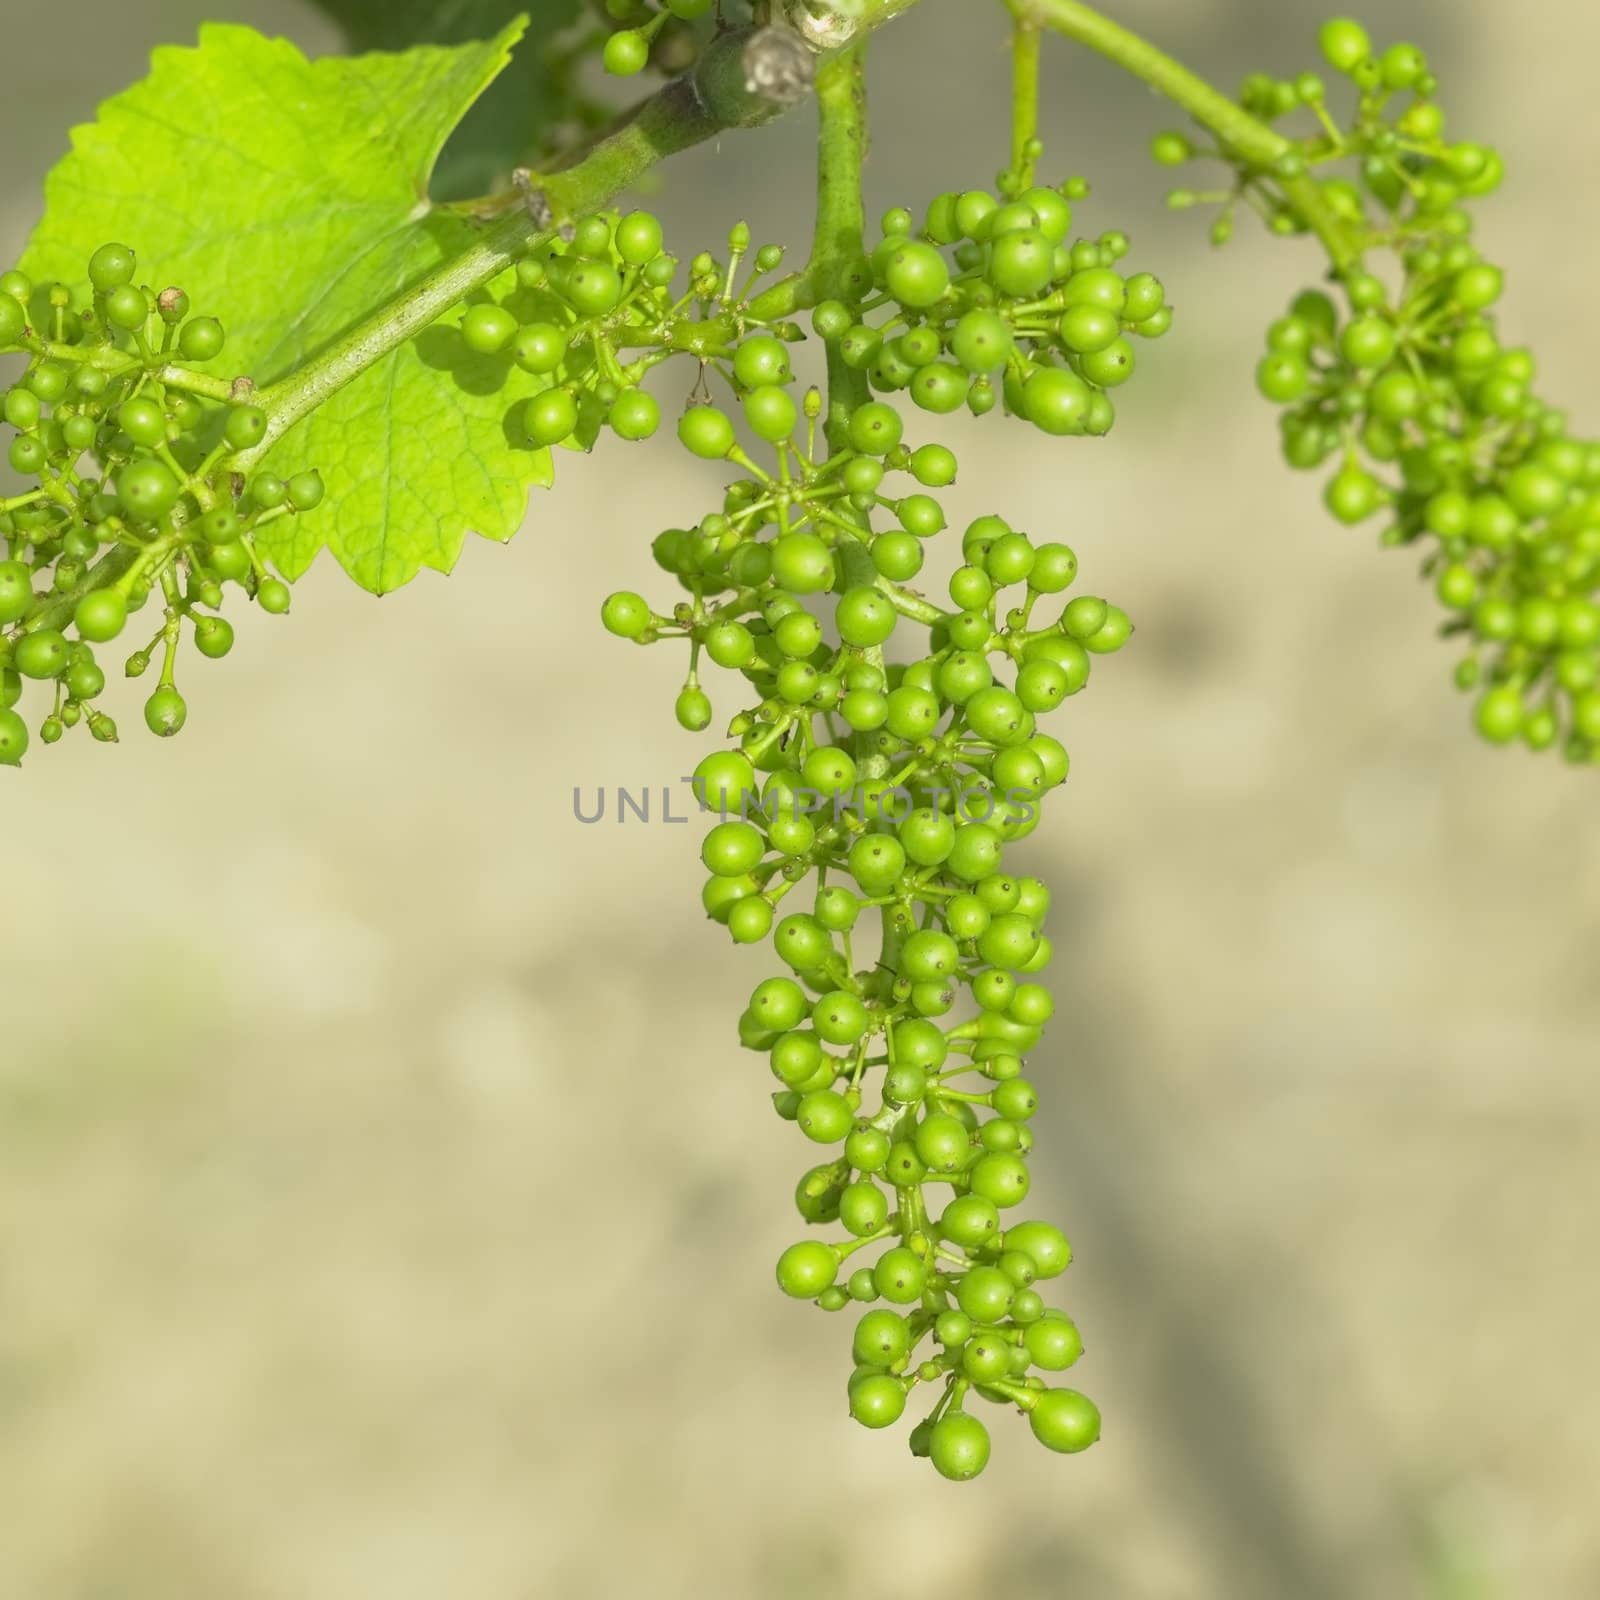 unripe grapevine, Czech Republic by phbcz